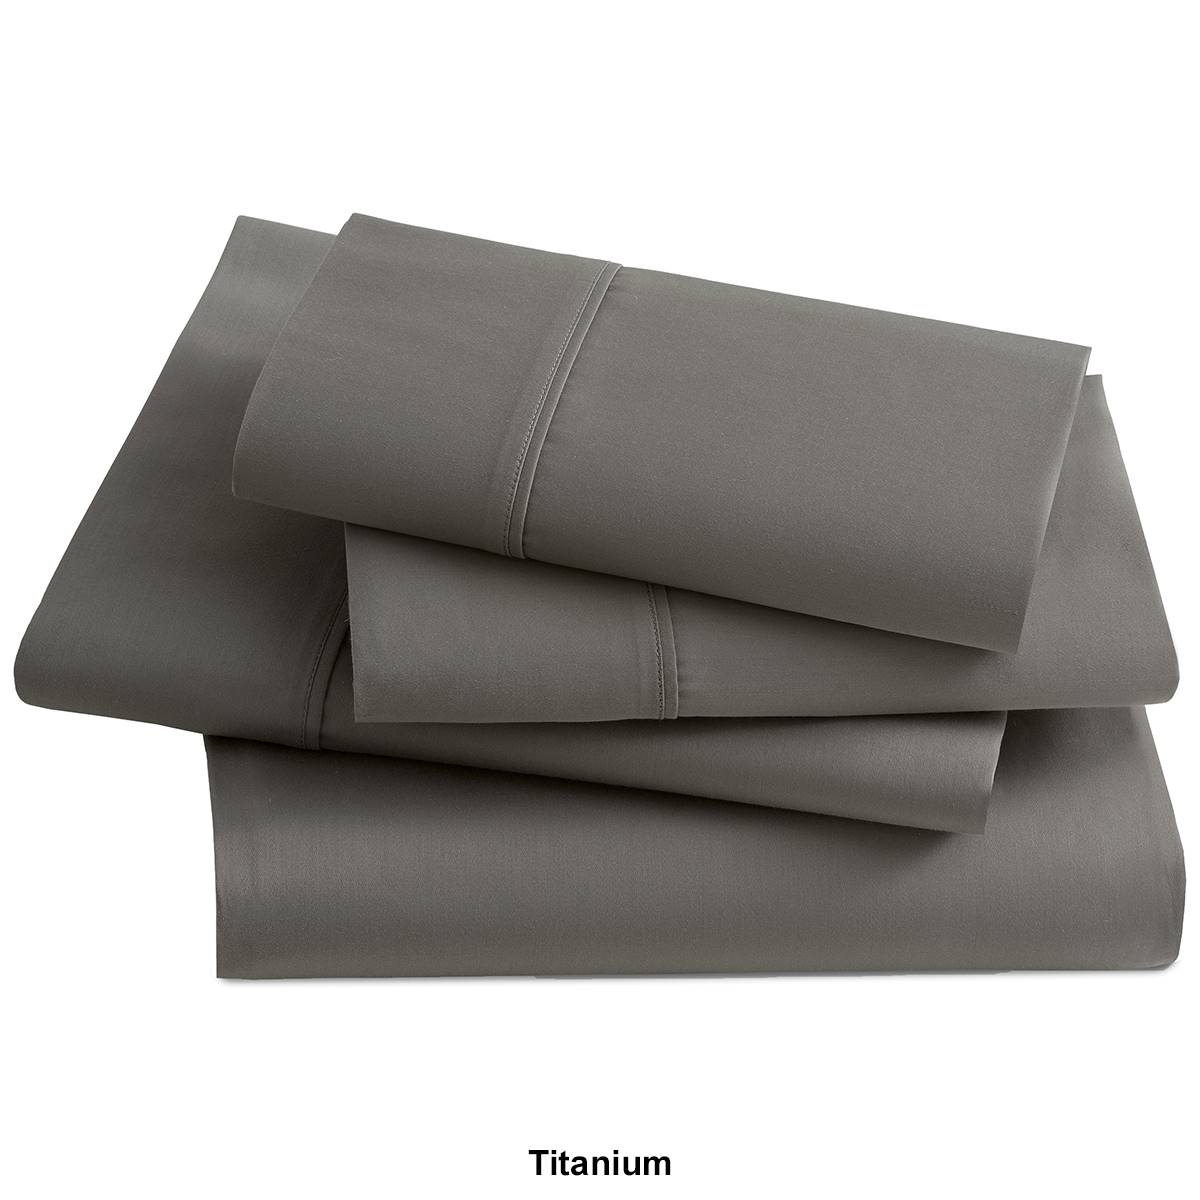 Cassadecor 300 TC Basics Cotton Bedding Sheet Set